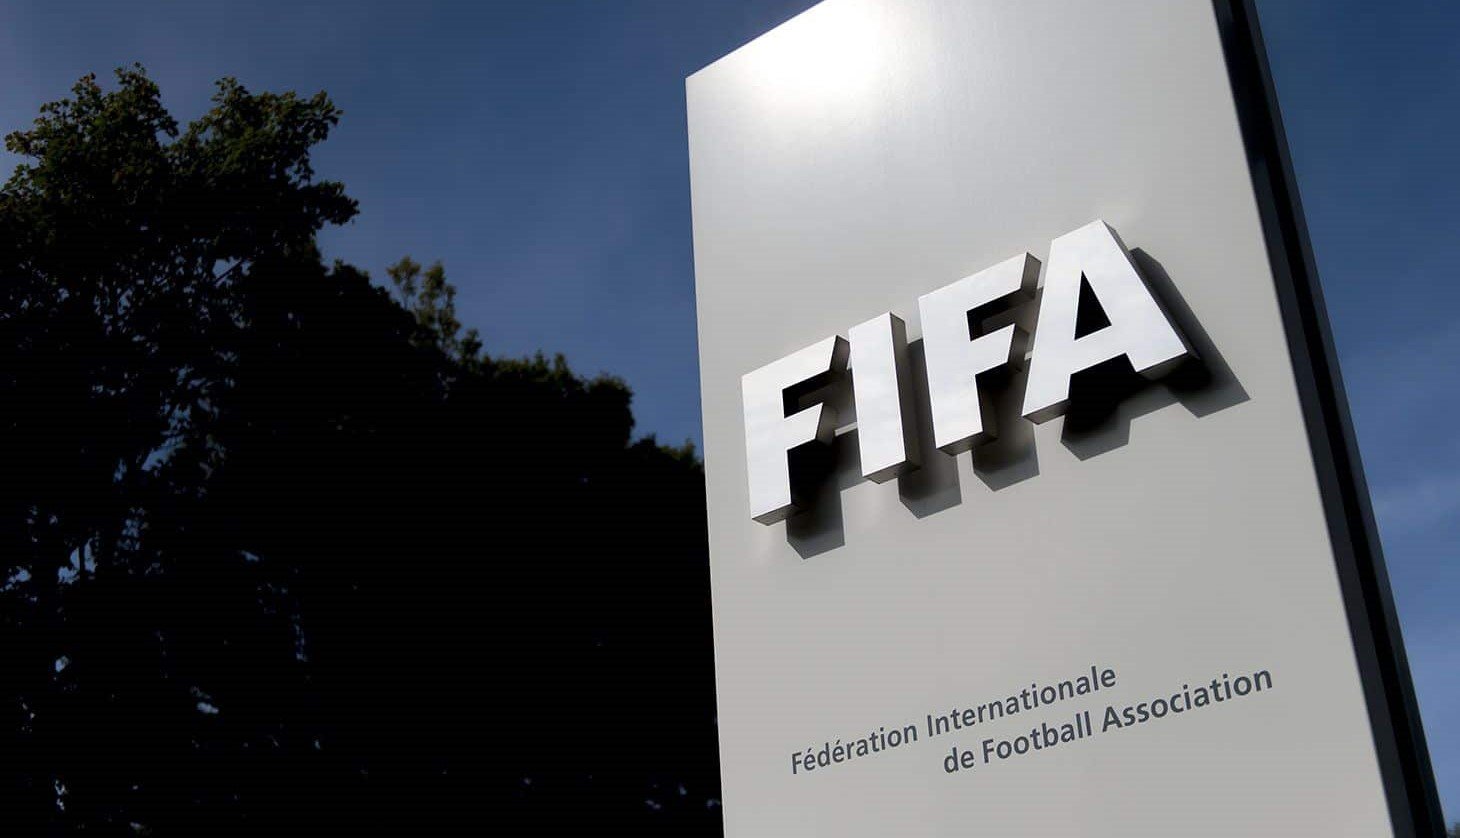 SWOT analysis of FIFA